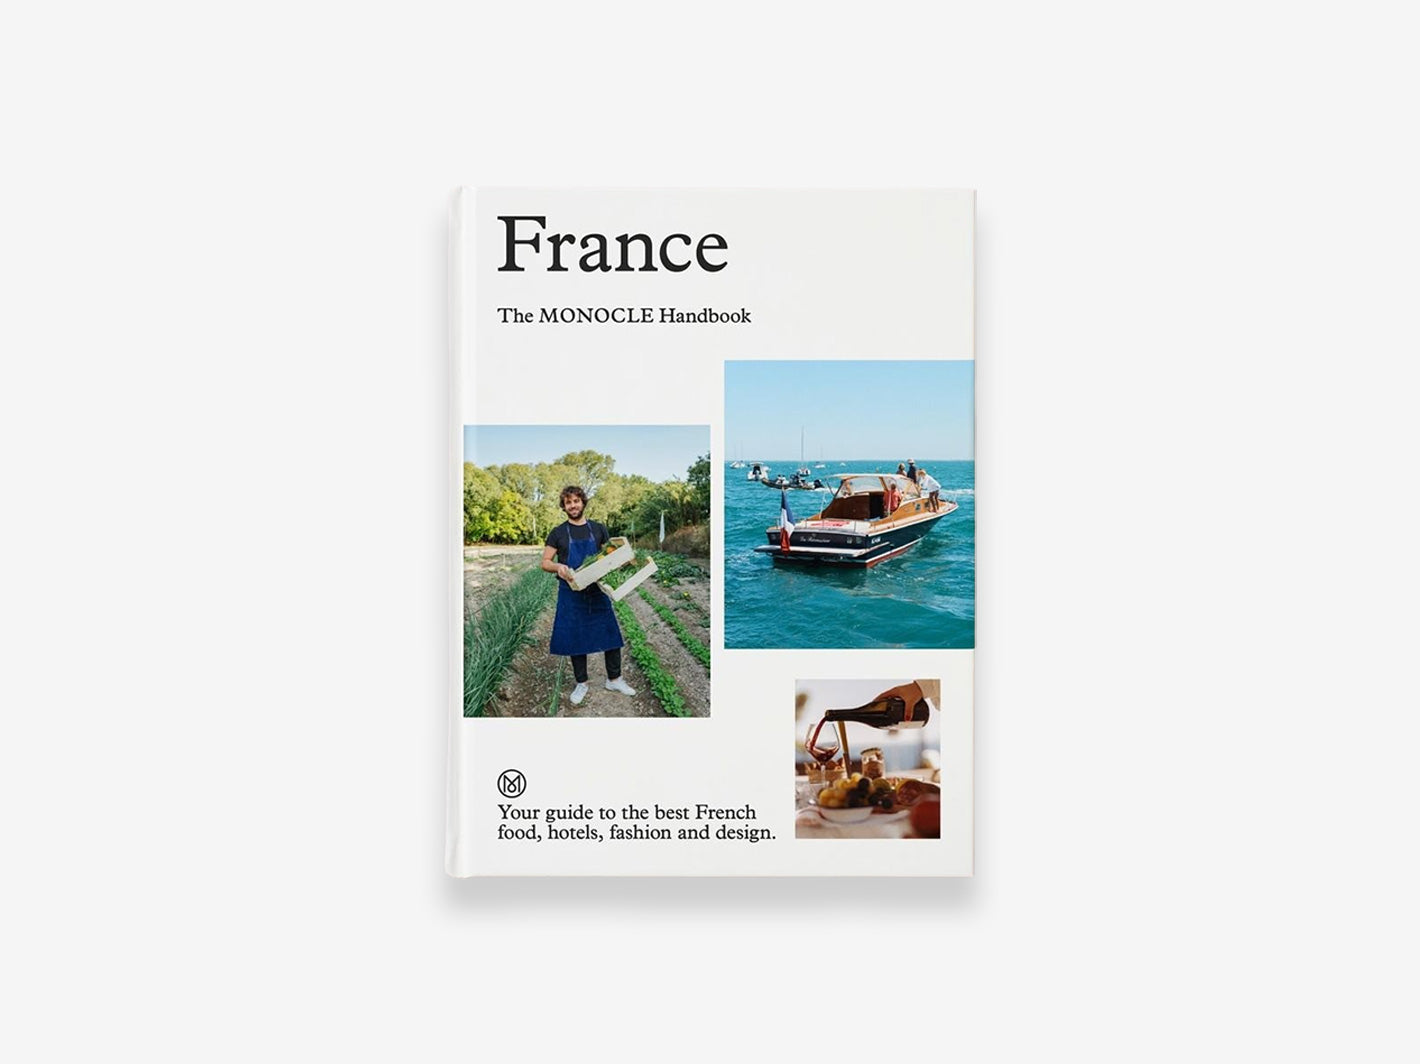 The Monocle Handbook: France